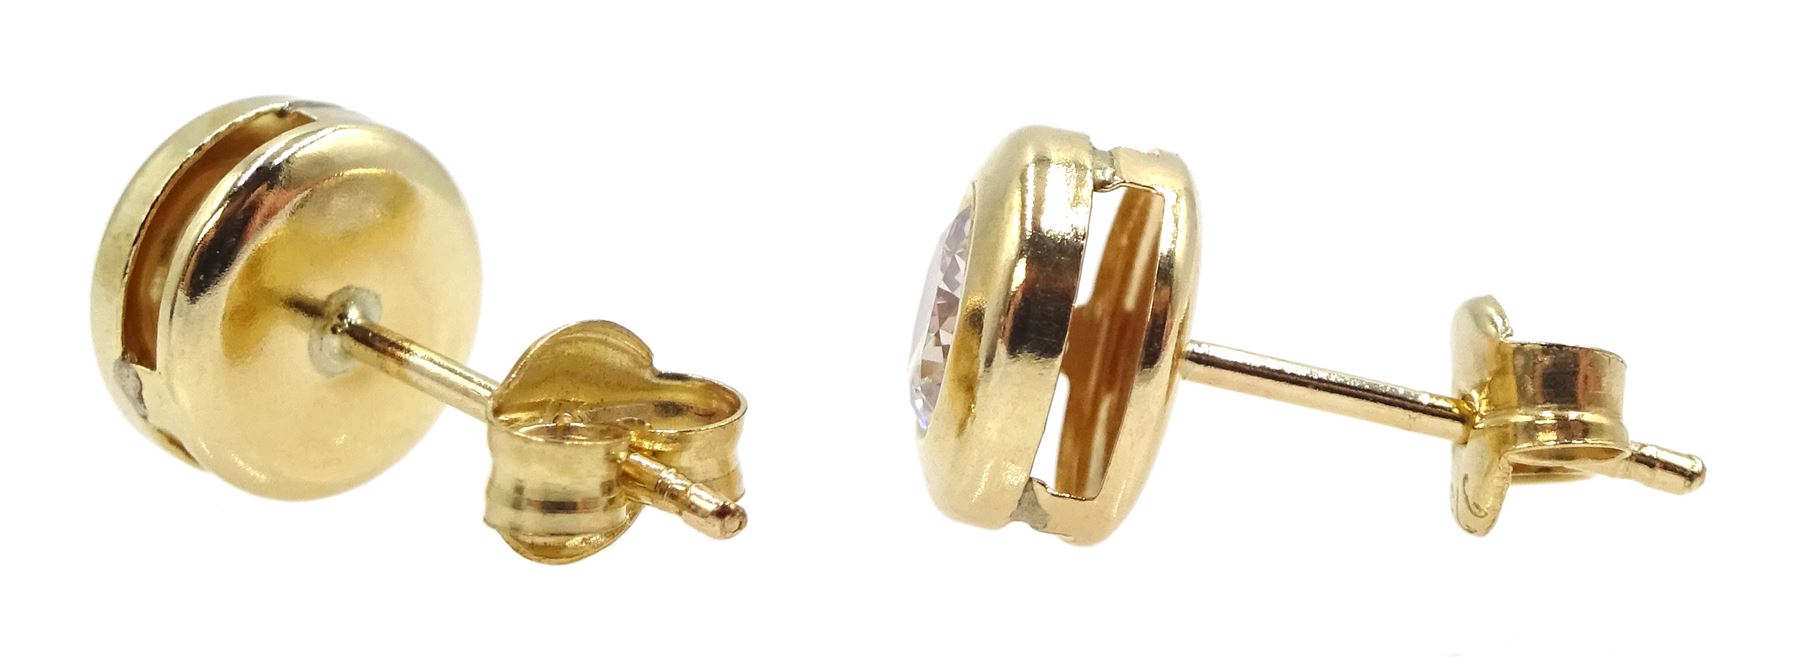 Pair of 9ct gold cubic zirconia stud earrings - Image 2 of 2